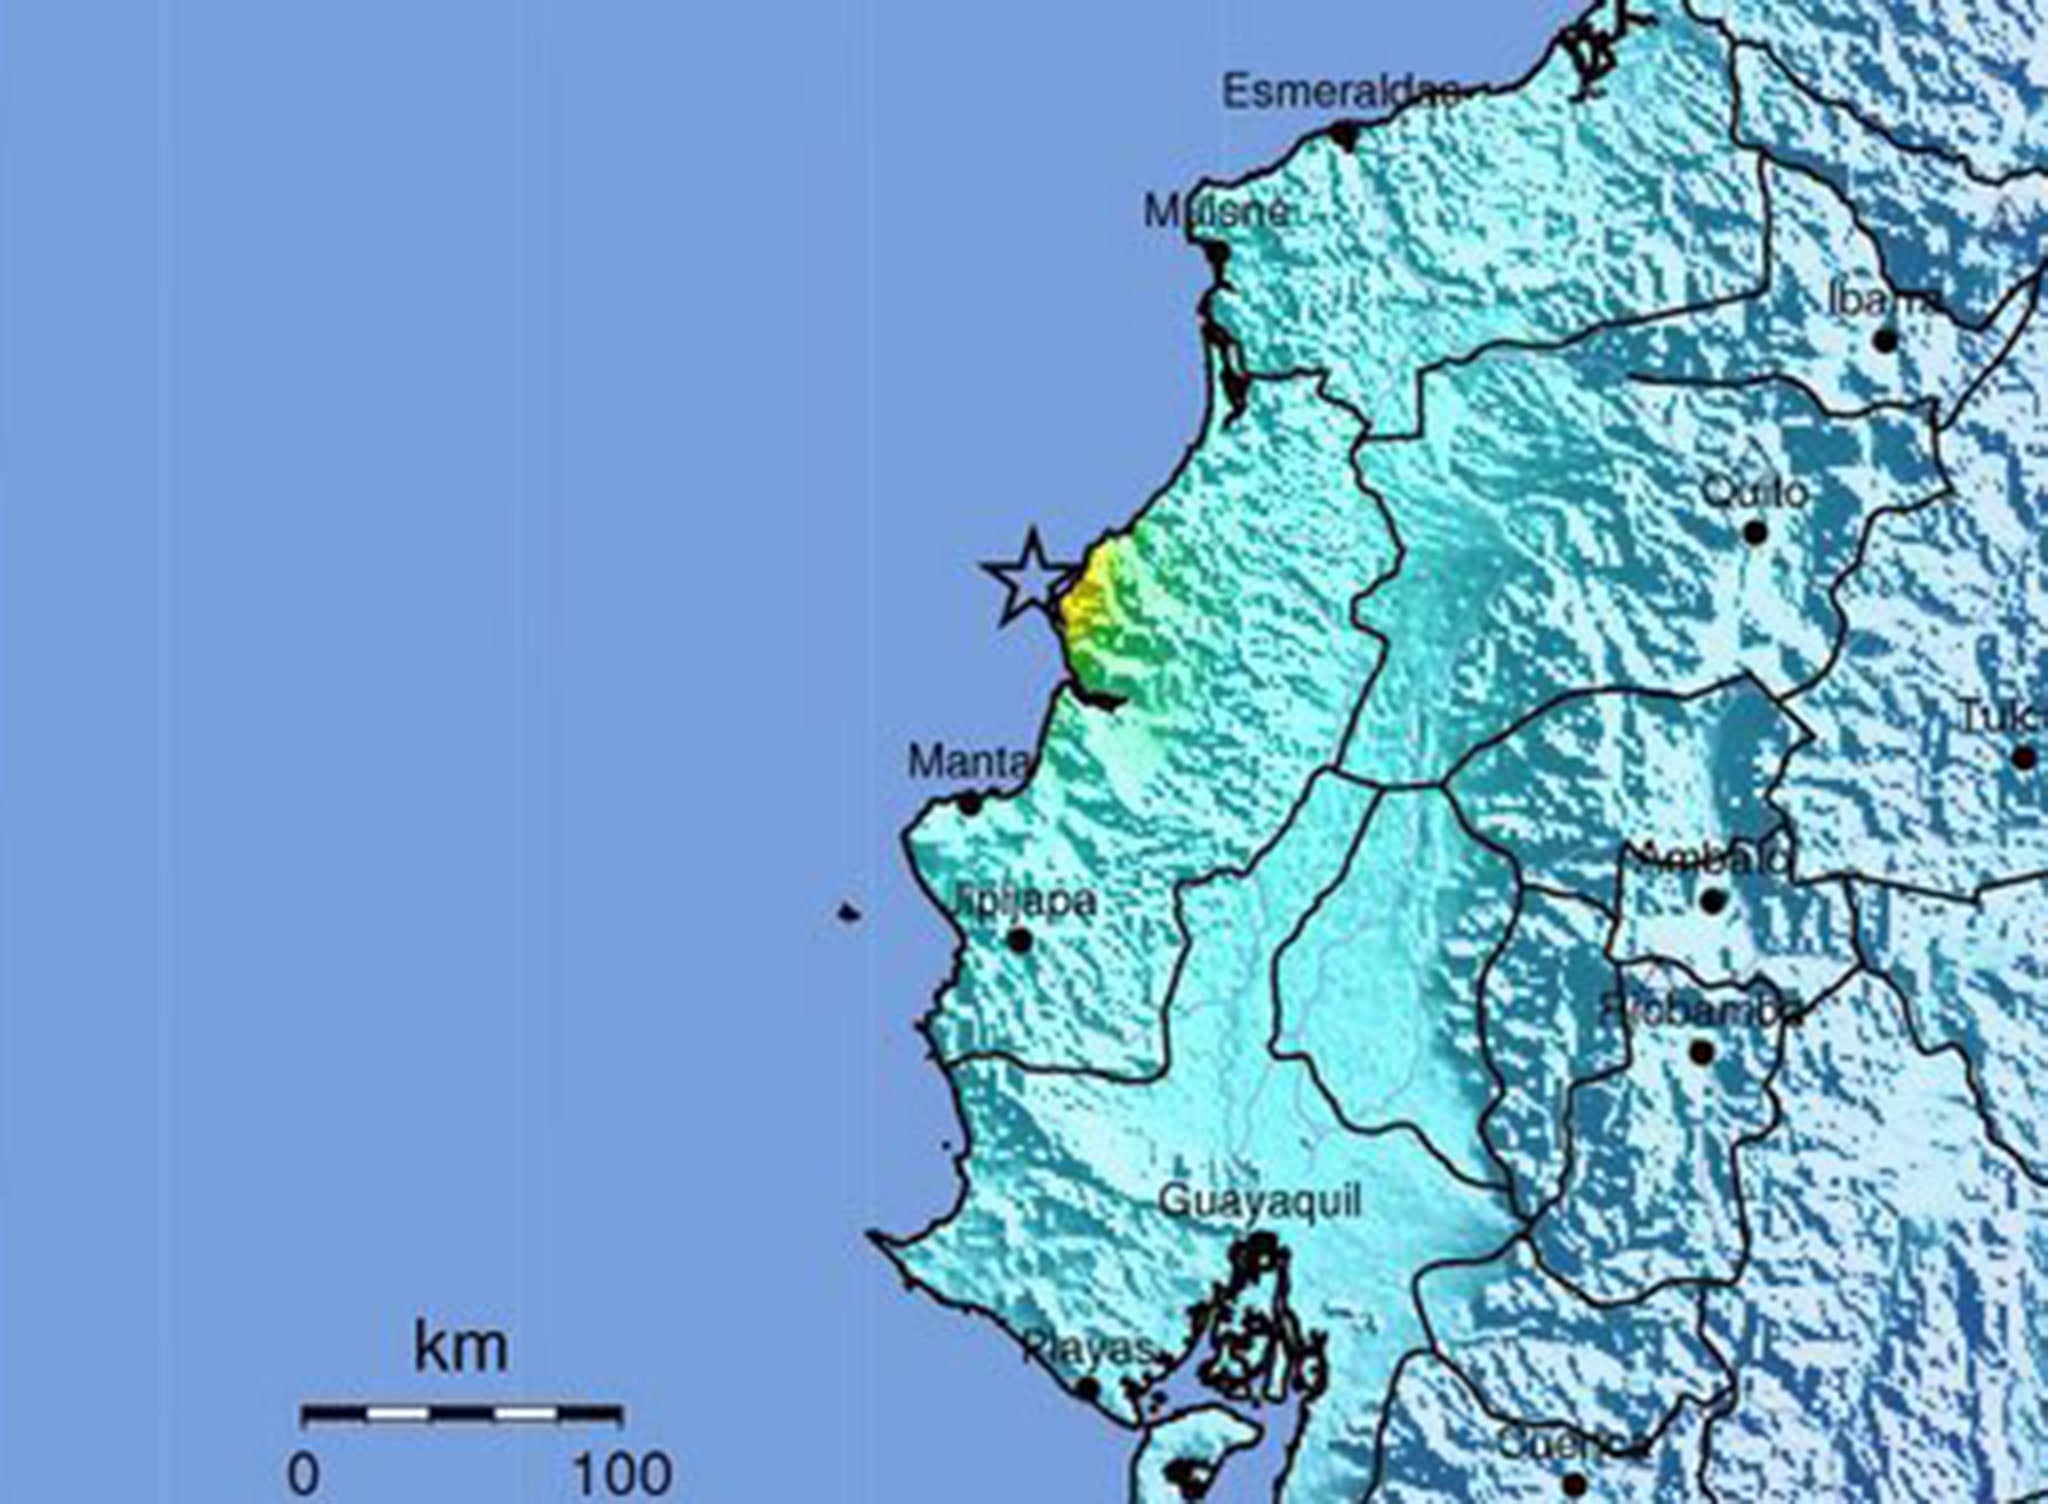 The star shows where the earthquake struck near Bahía de Caráquez